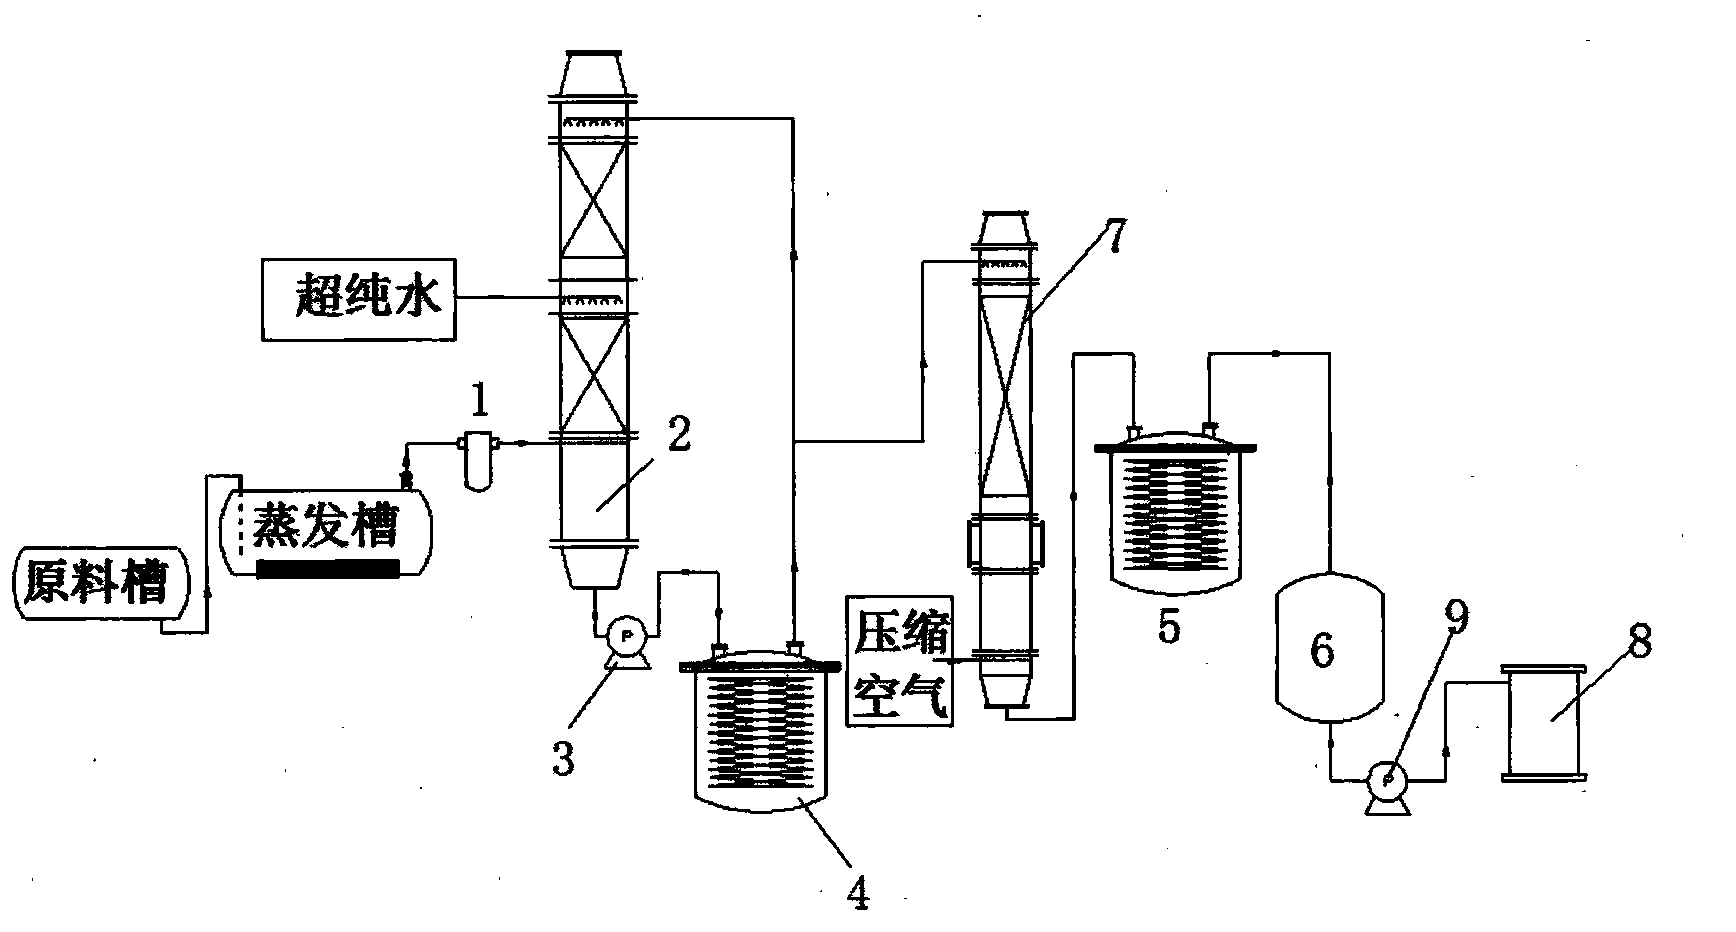 Production method of electronic-grade sulphuric acid